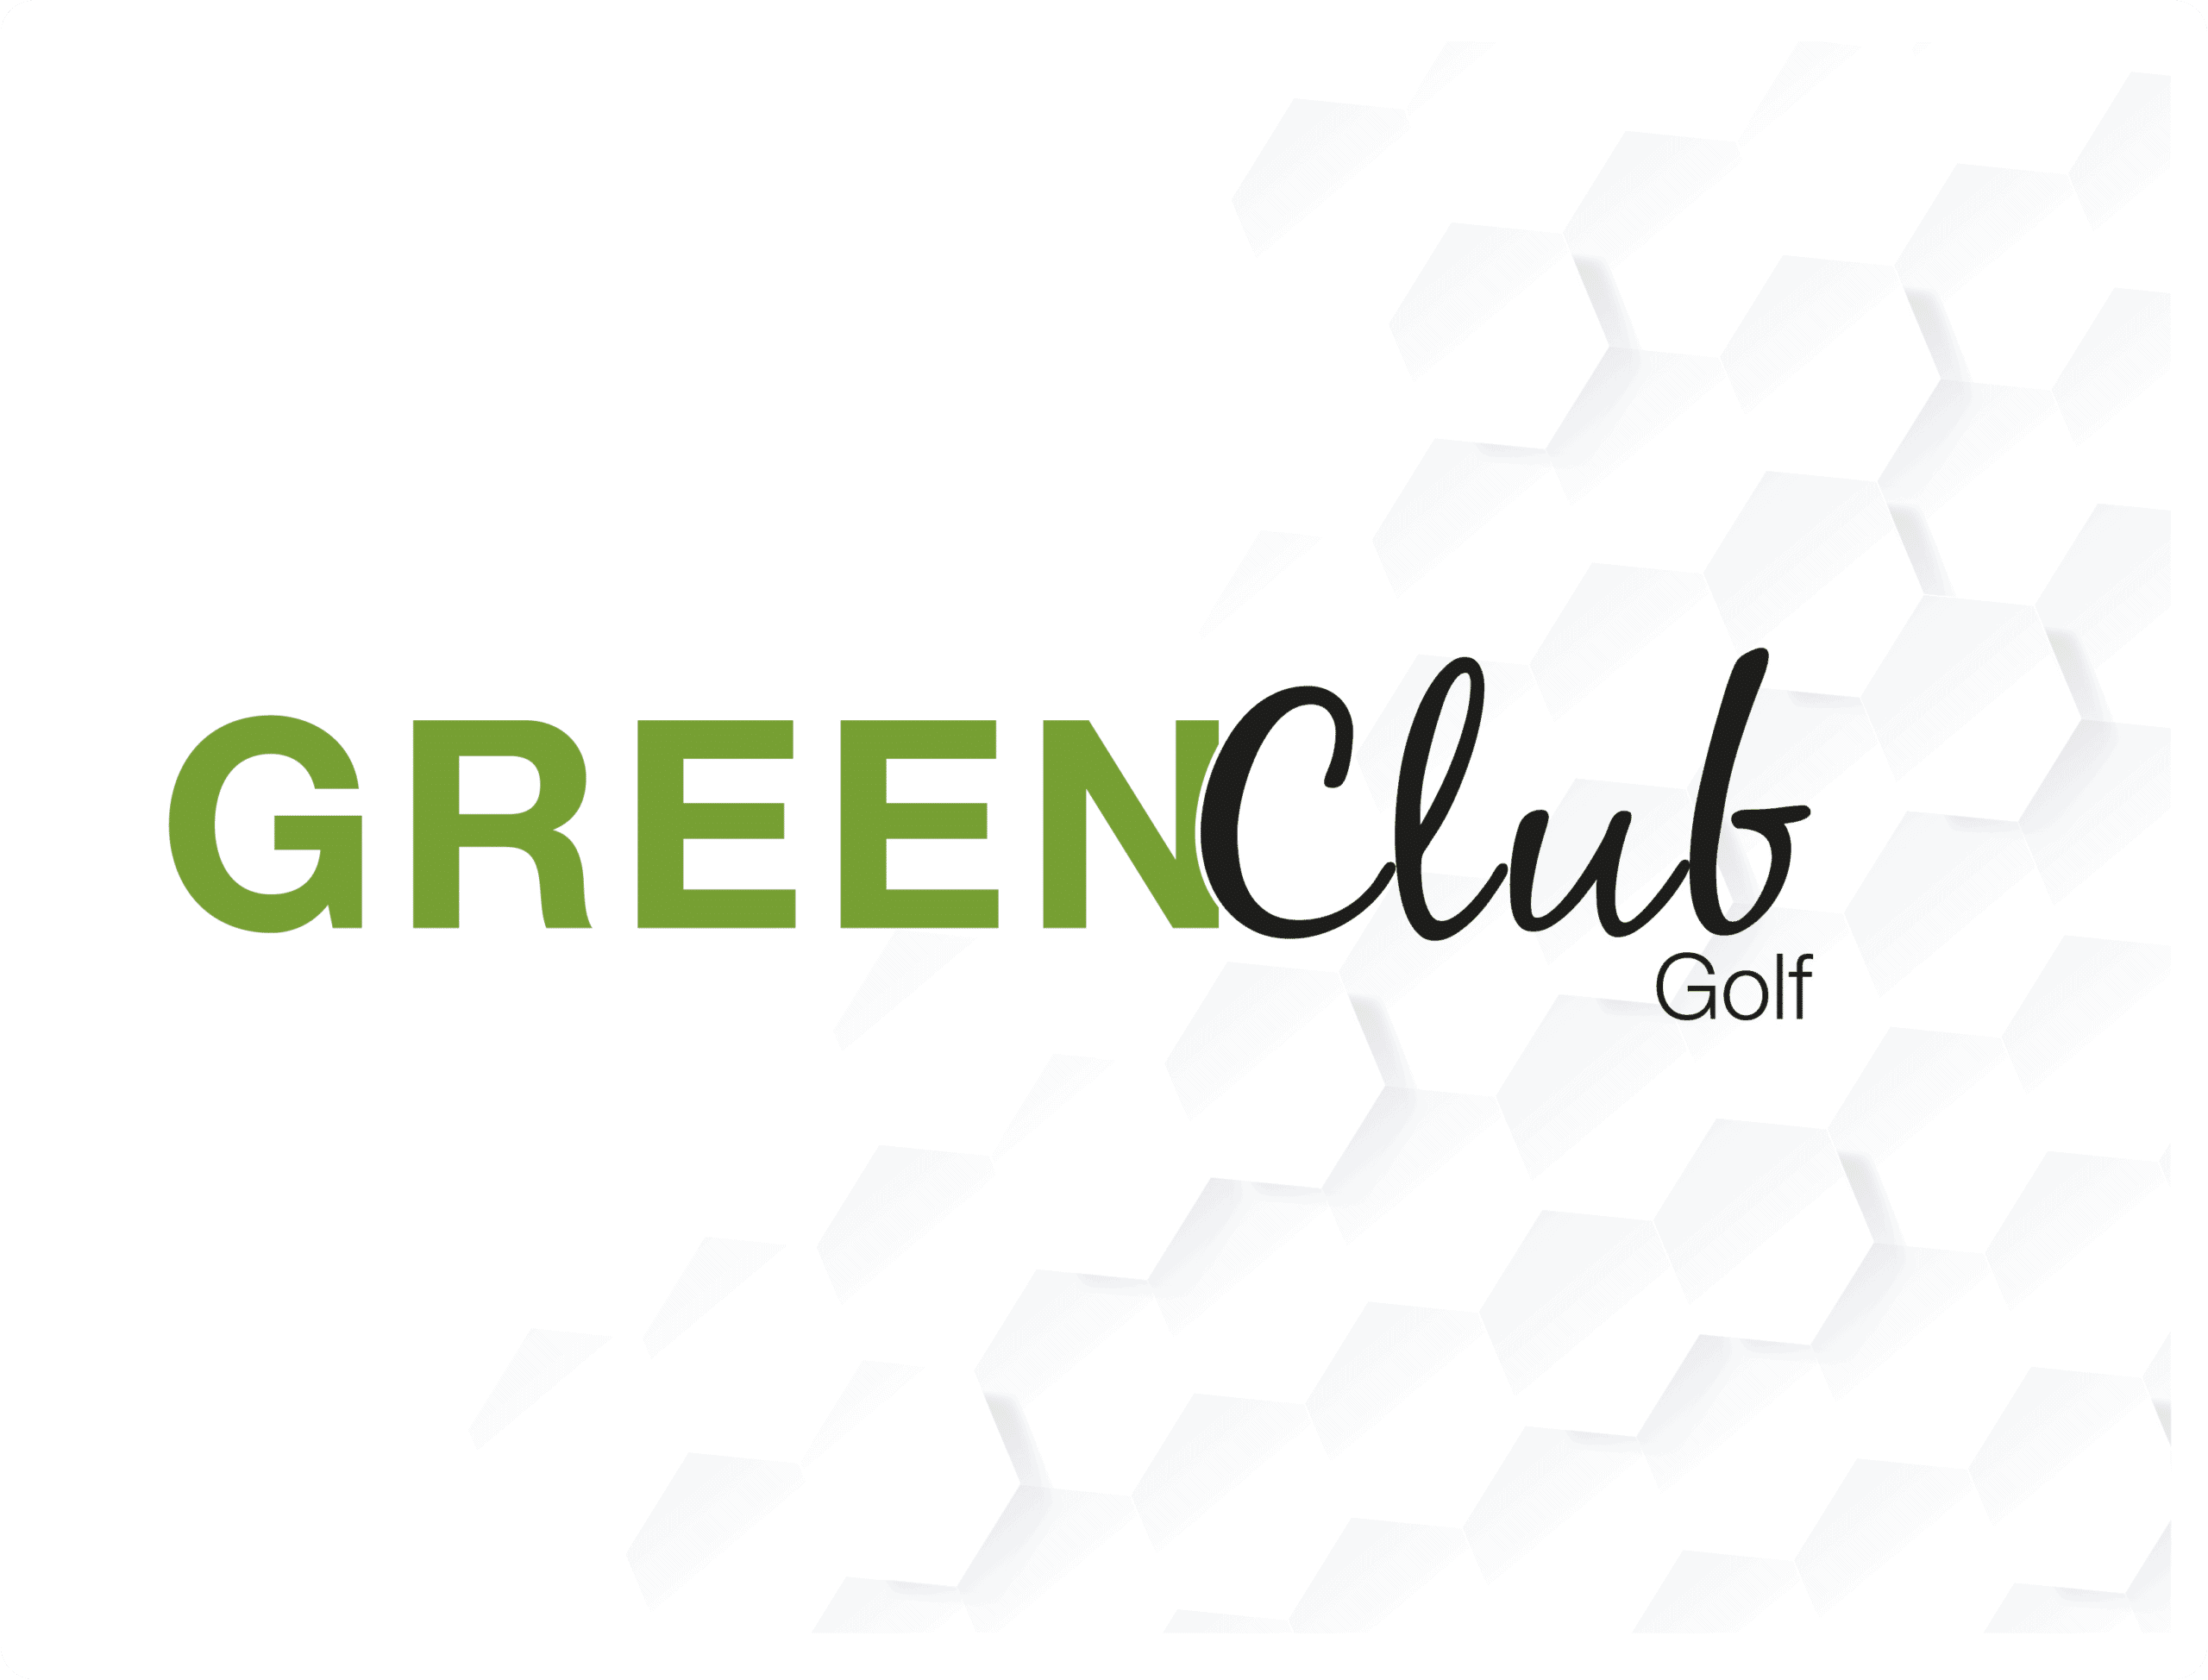 greenclub-golf-suisse-idée cadeau